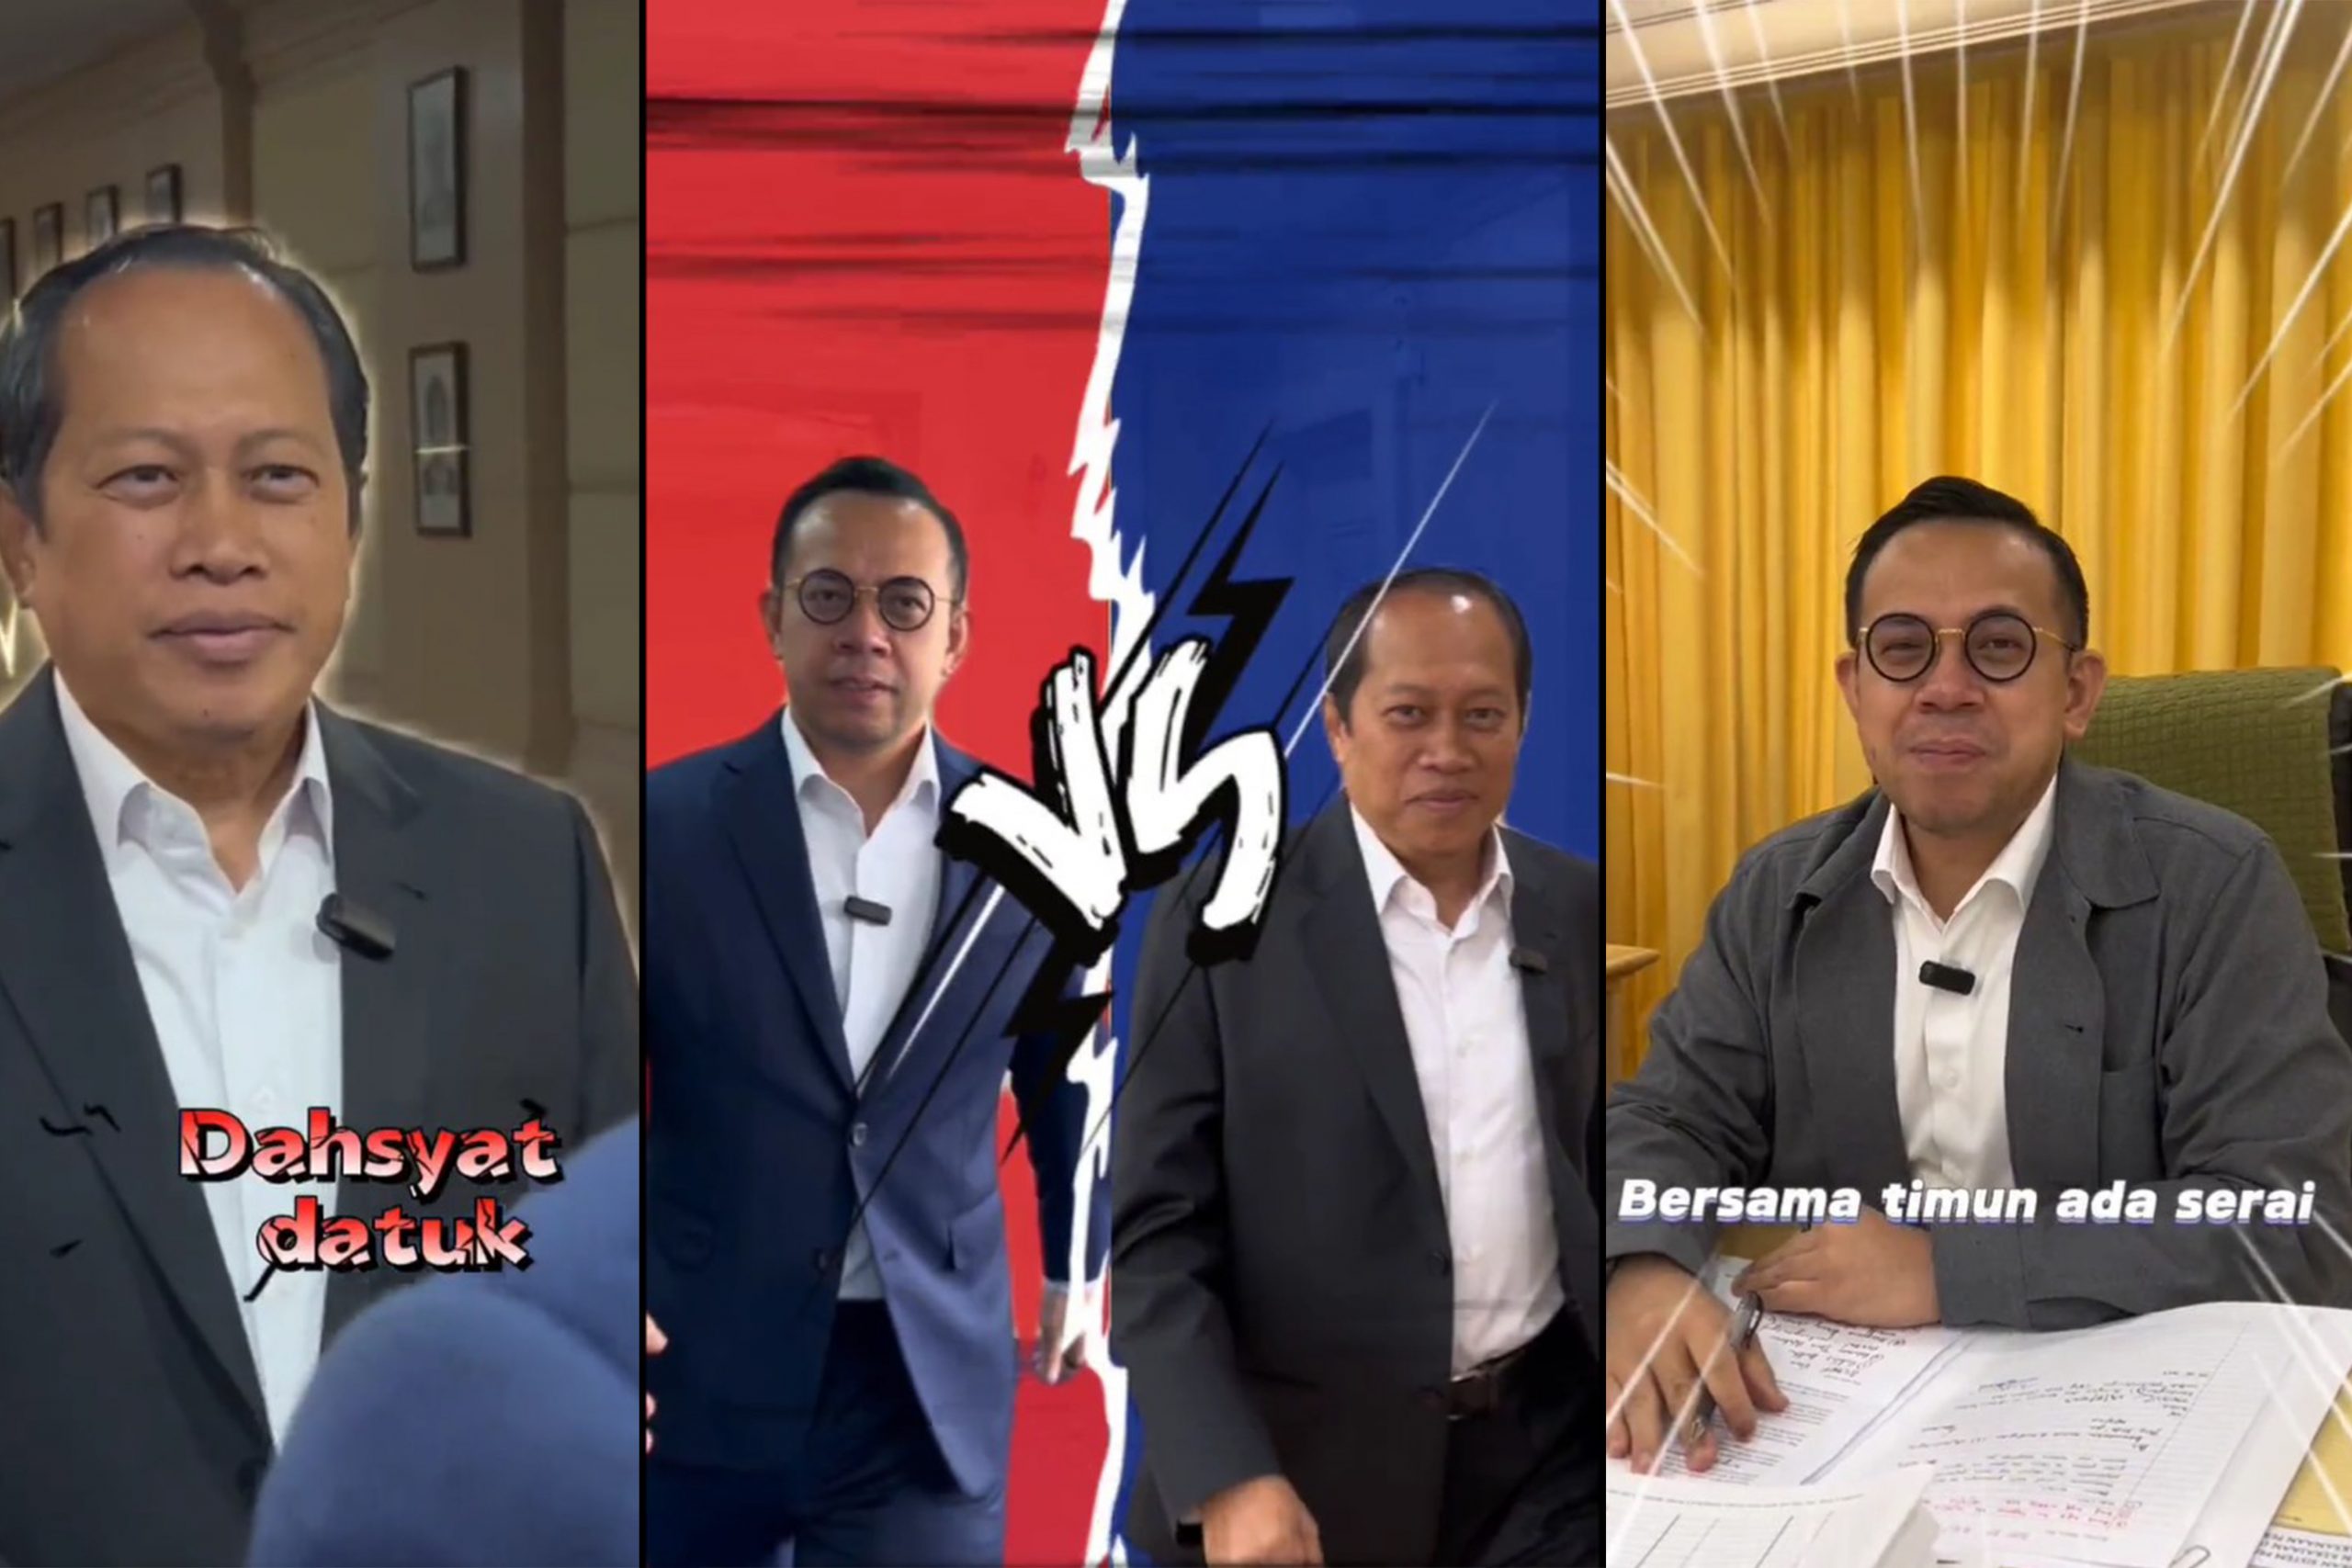 ‘Pantun’ battle between deputy ministers Sim and Ahmad Maslan receives thumbs up